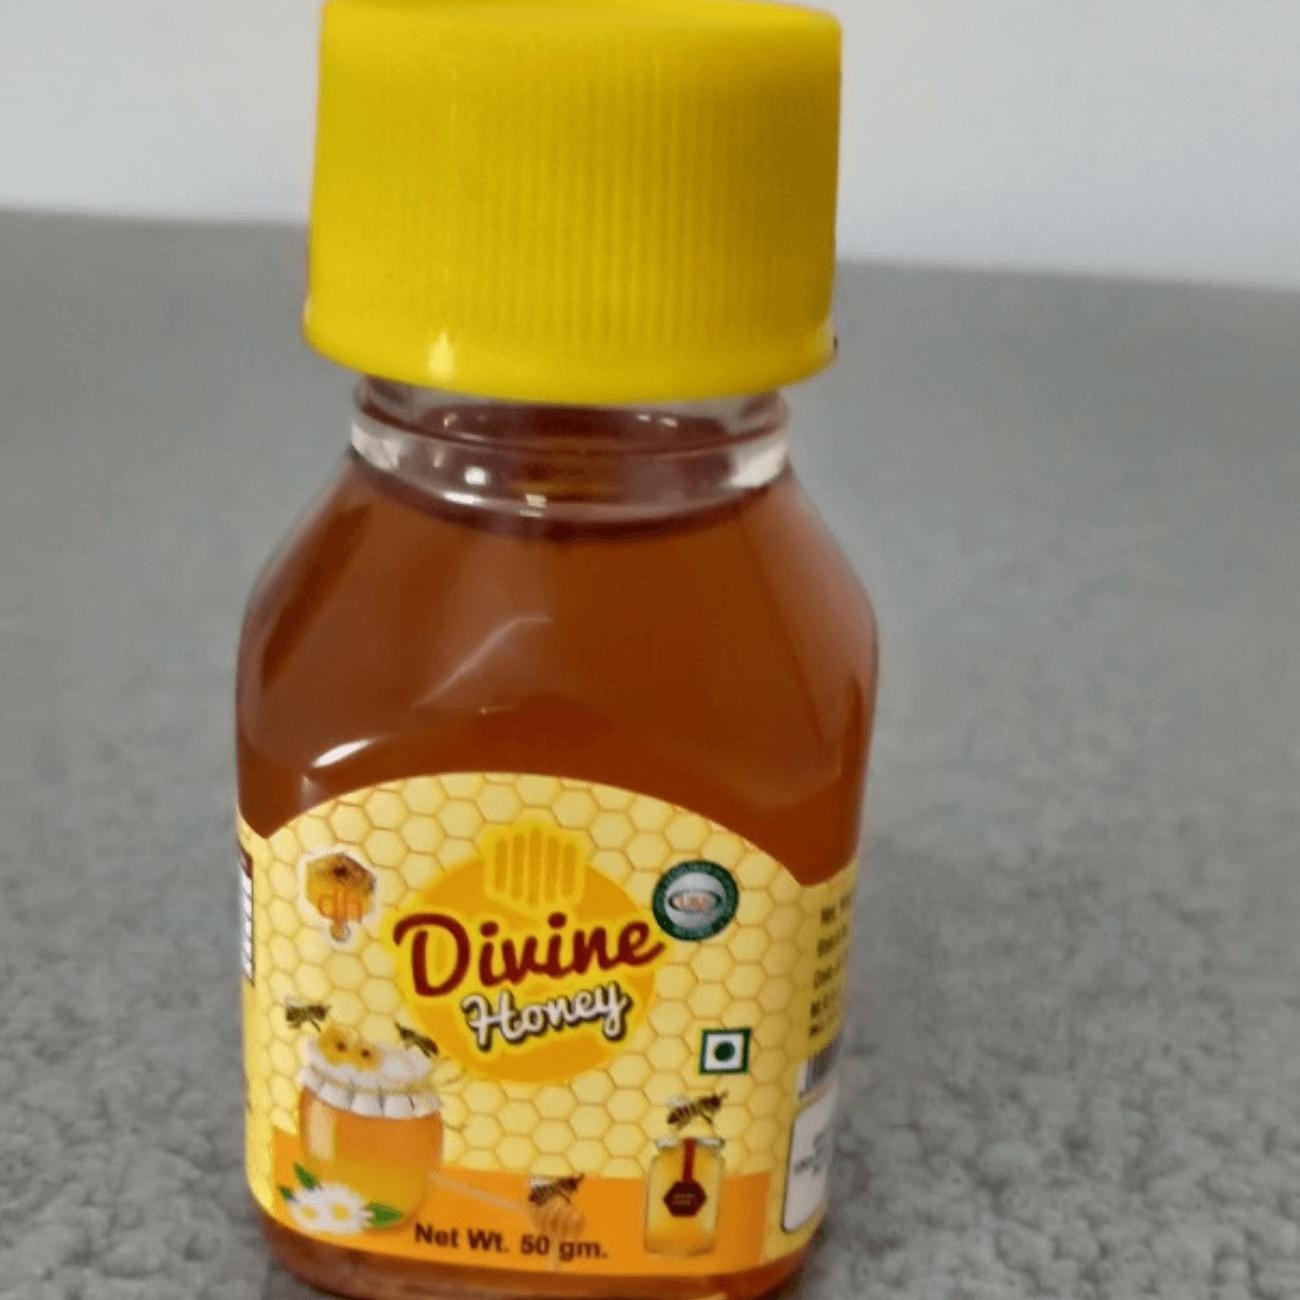 Divine pure Honey